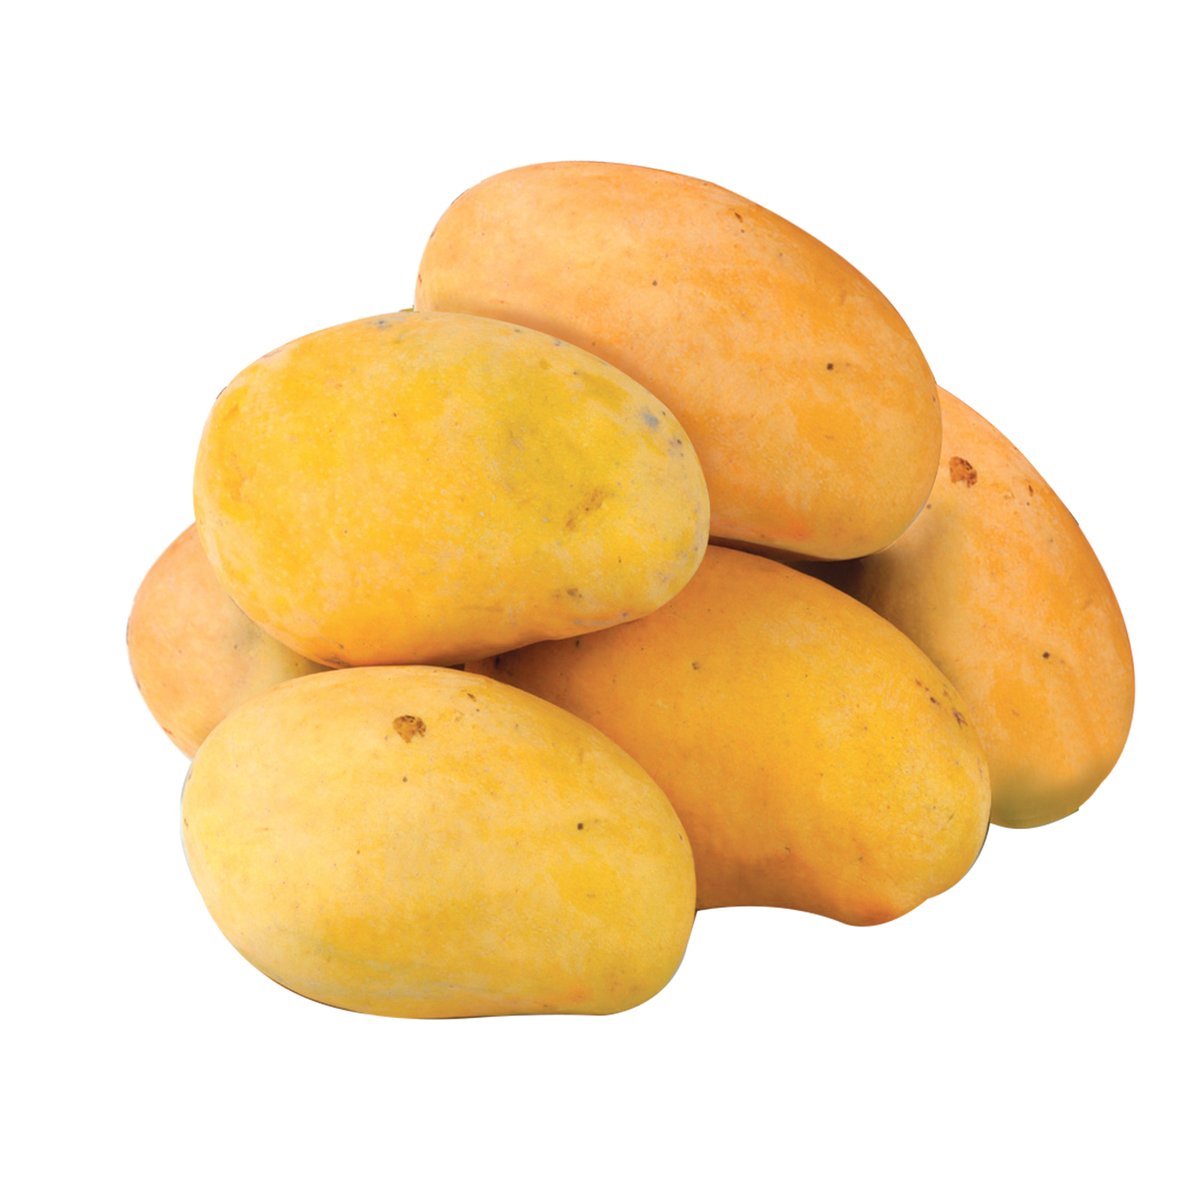 Mango Pakistan 1 kg